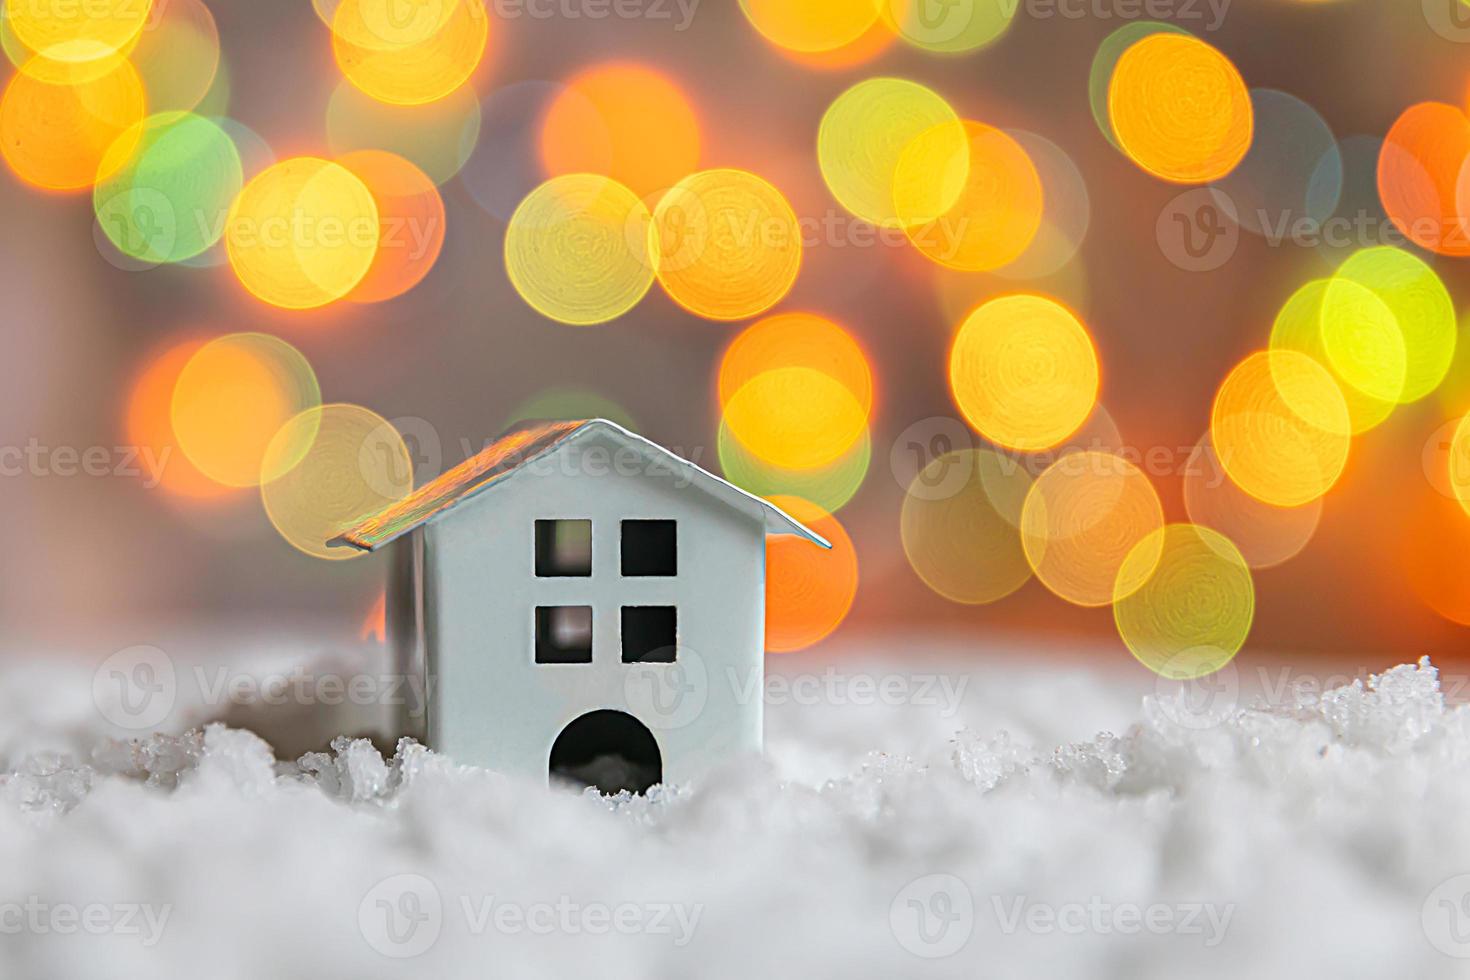 abstract komst Kerstmis achtergrond. speelgoed- model- huis Aan sneeuw met onscherp slinger lichten achtergrond. Kerstmis met familie Bij huis concept. Kerstmis winter samenstelling. foto